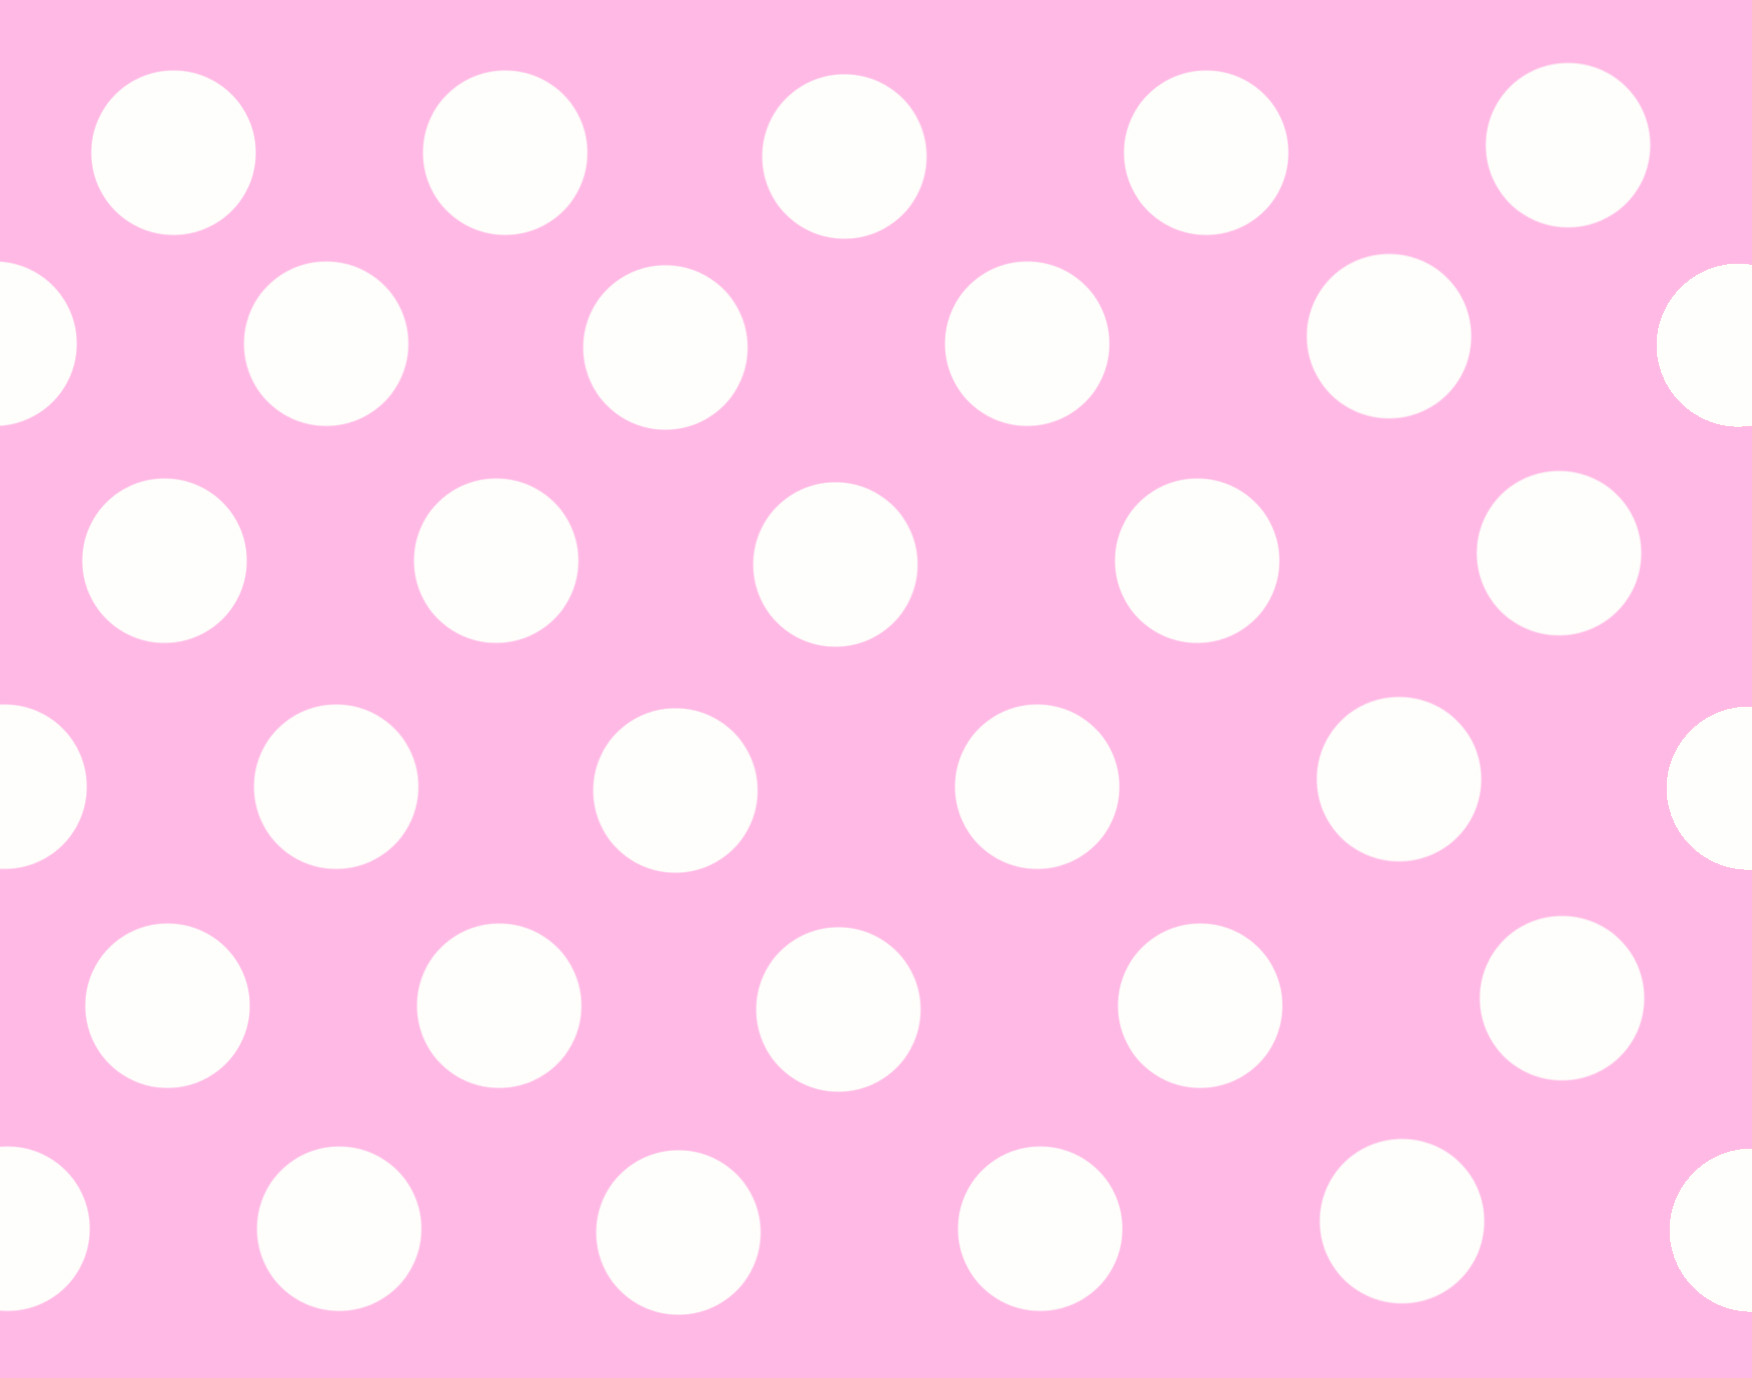 Polka Dot Wallpaper Desktop Background